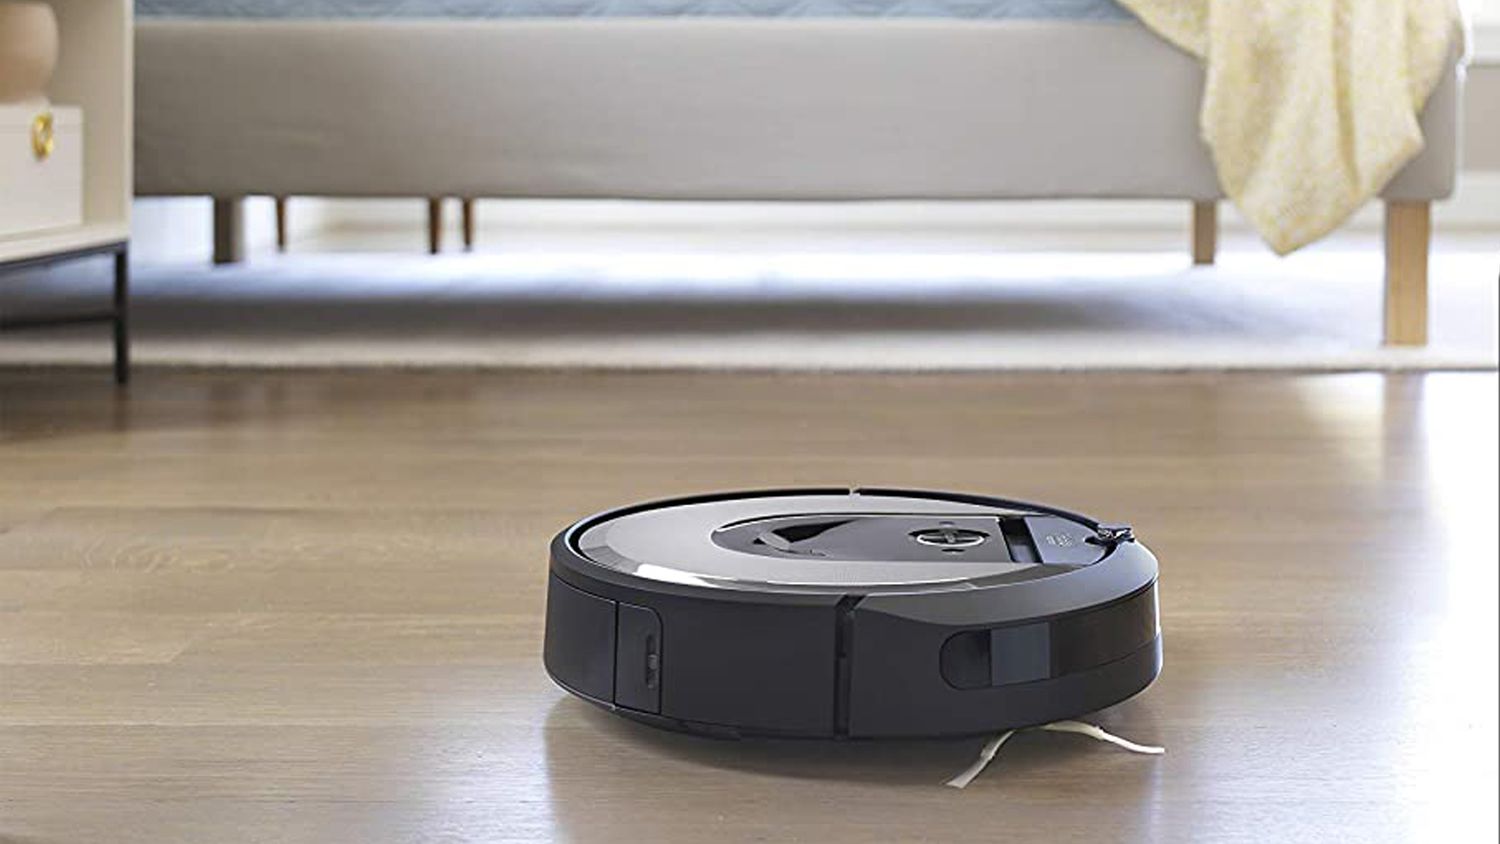 Best Robot Vacuums For Hardwood Floors, Robot Vacuum For Laminate Floors